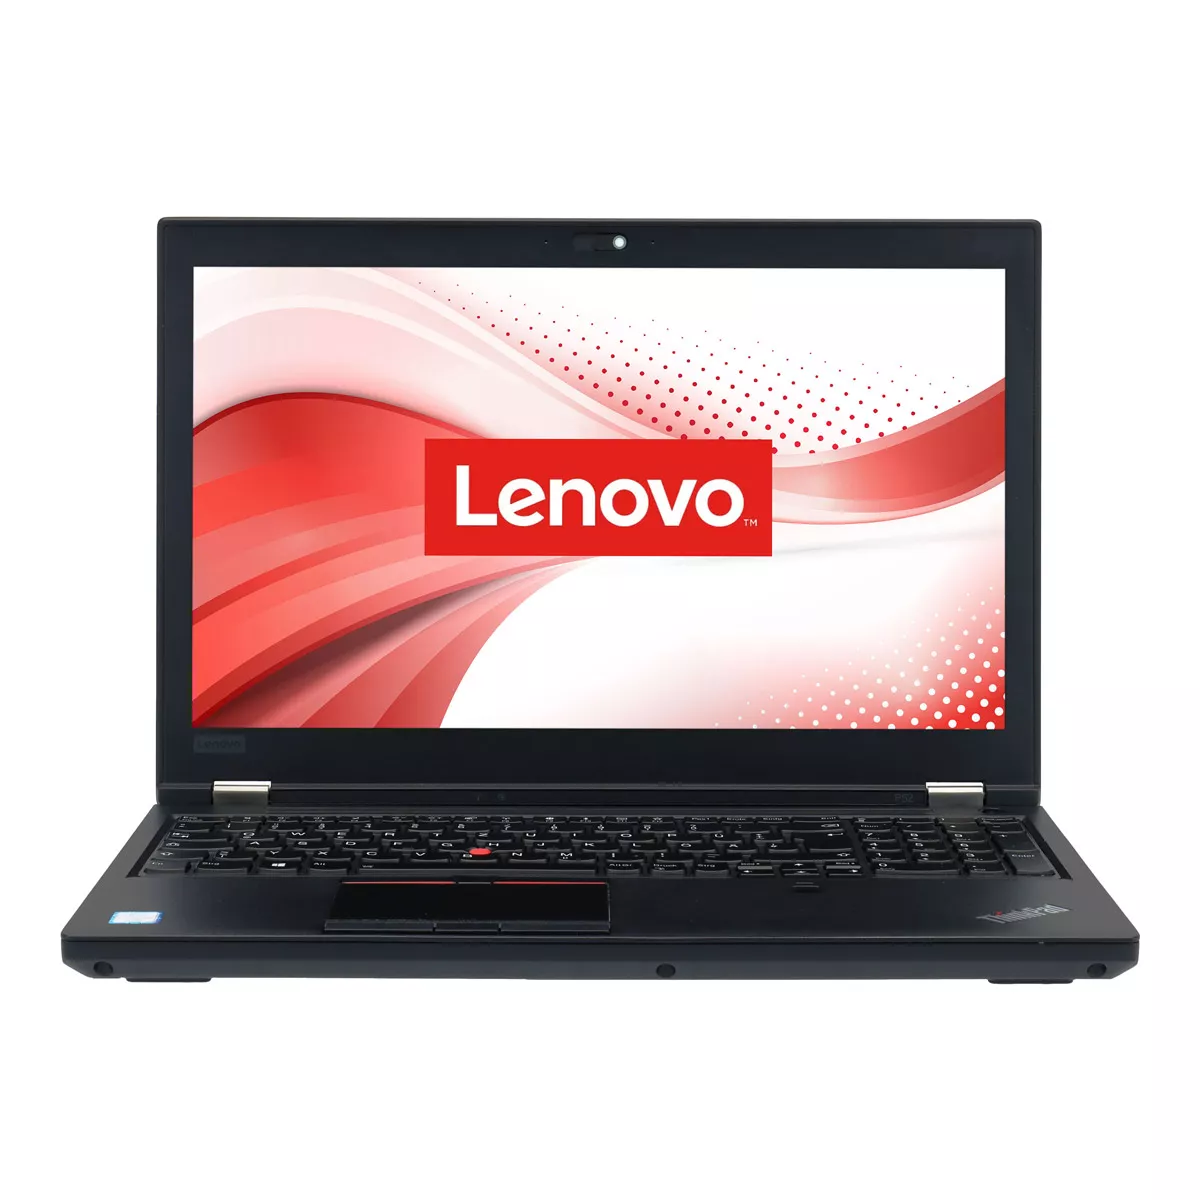 Lenovo ThinkPad P52 Core i9 8950HK nVidia Quadro P3200M 32 GB 500 GB M.2 nVME SSD Webcam A+